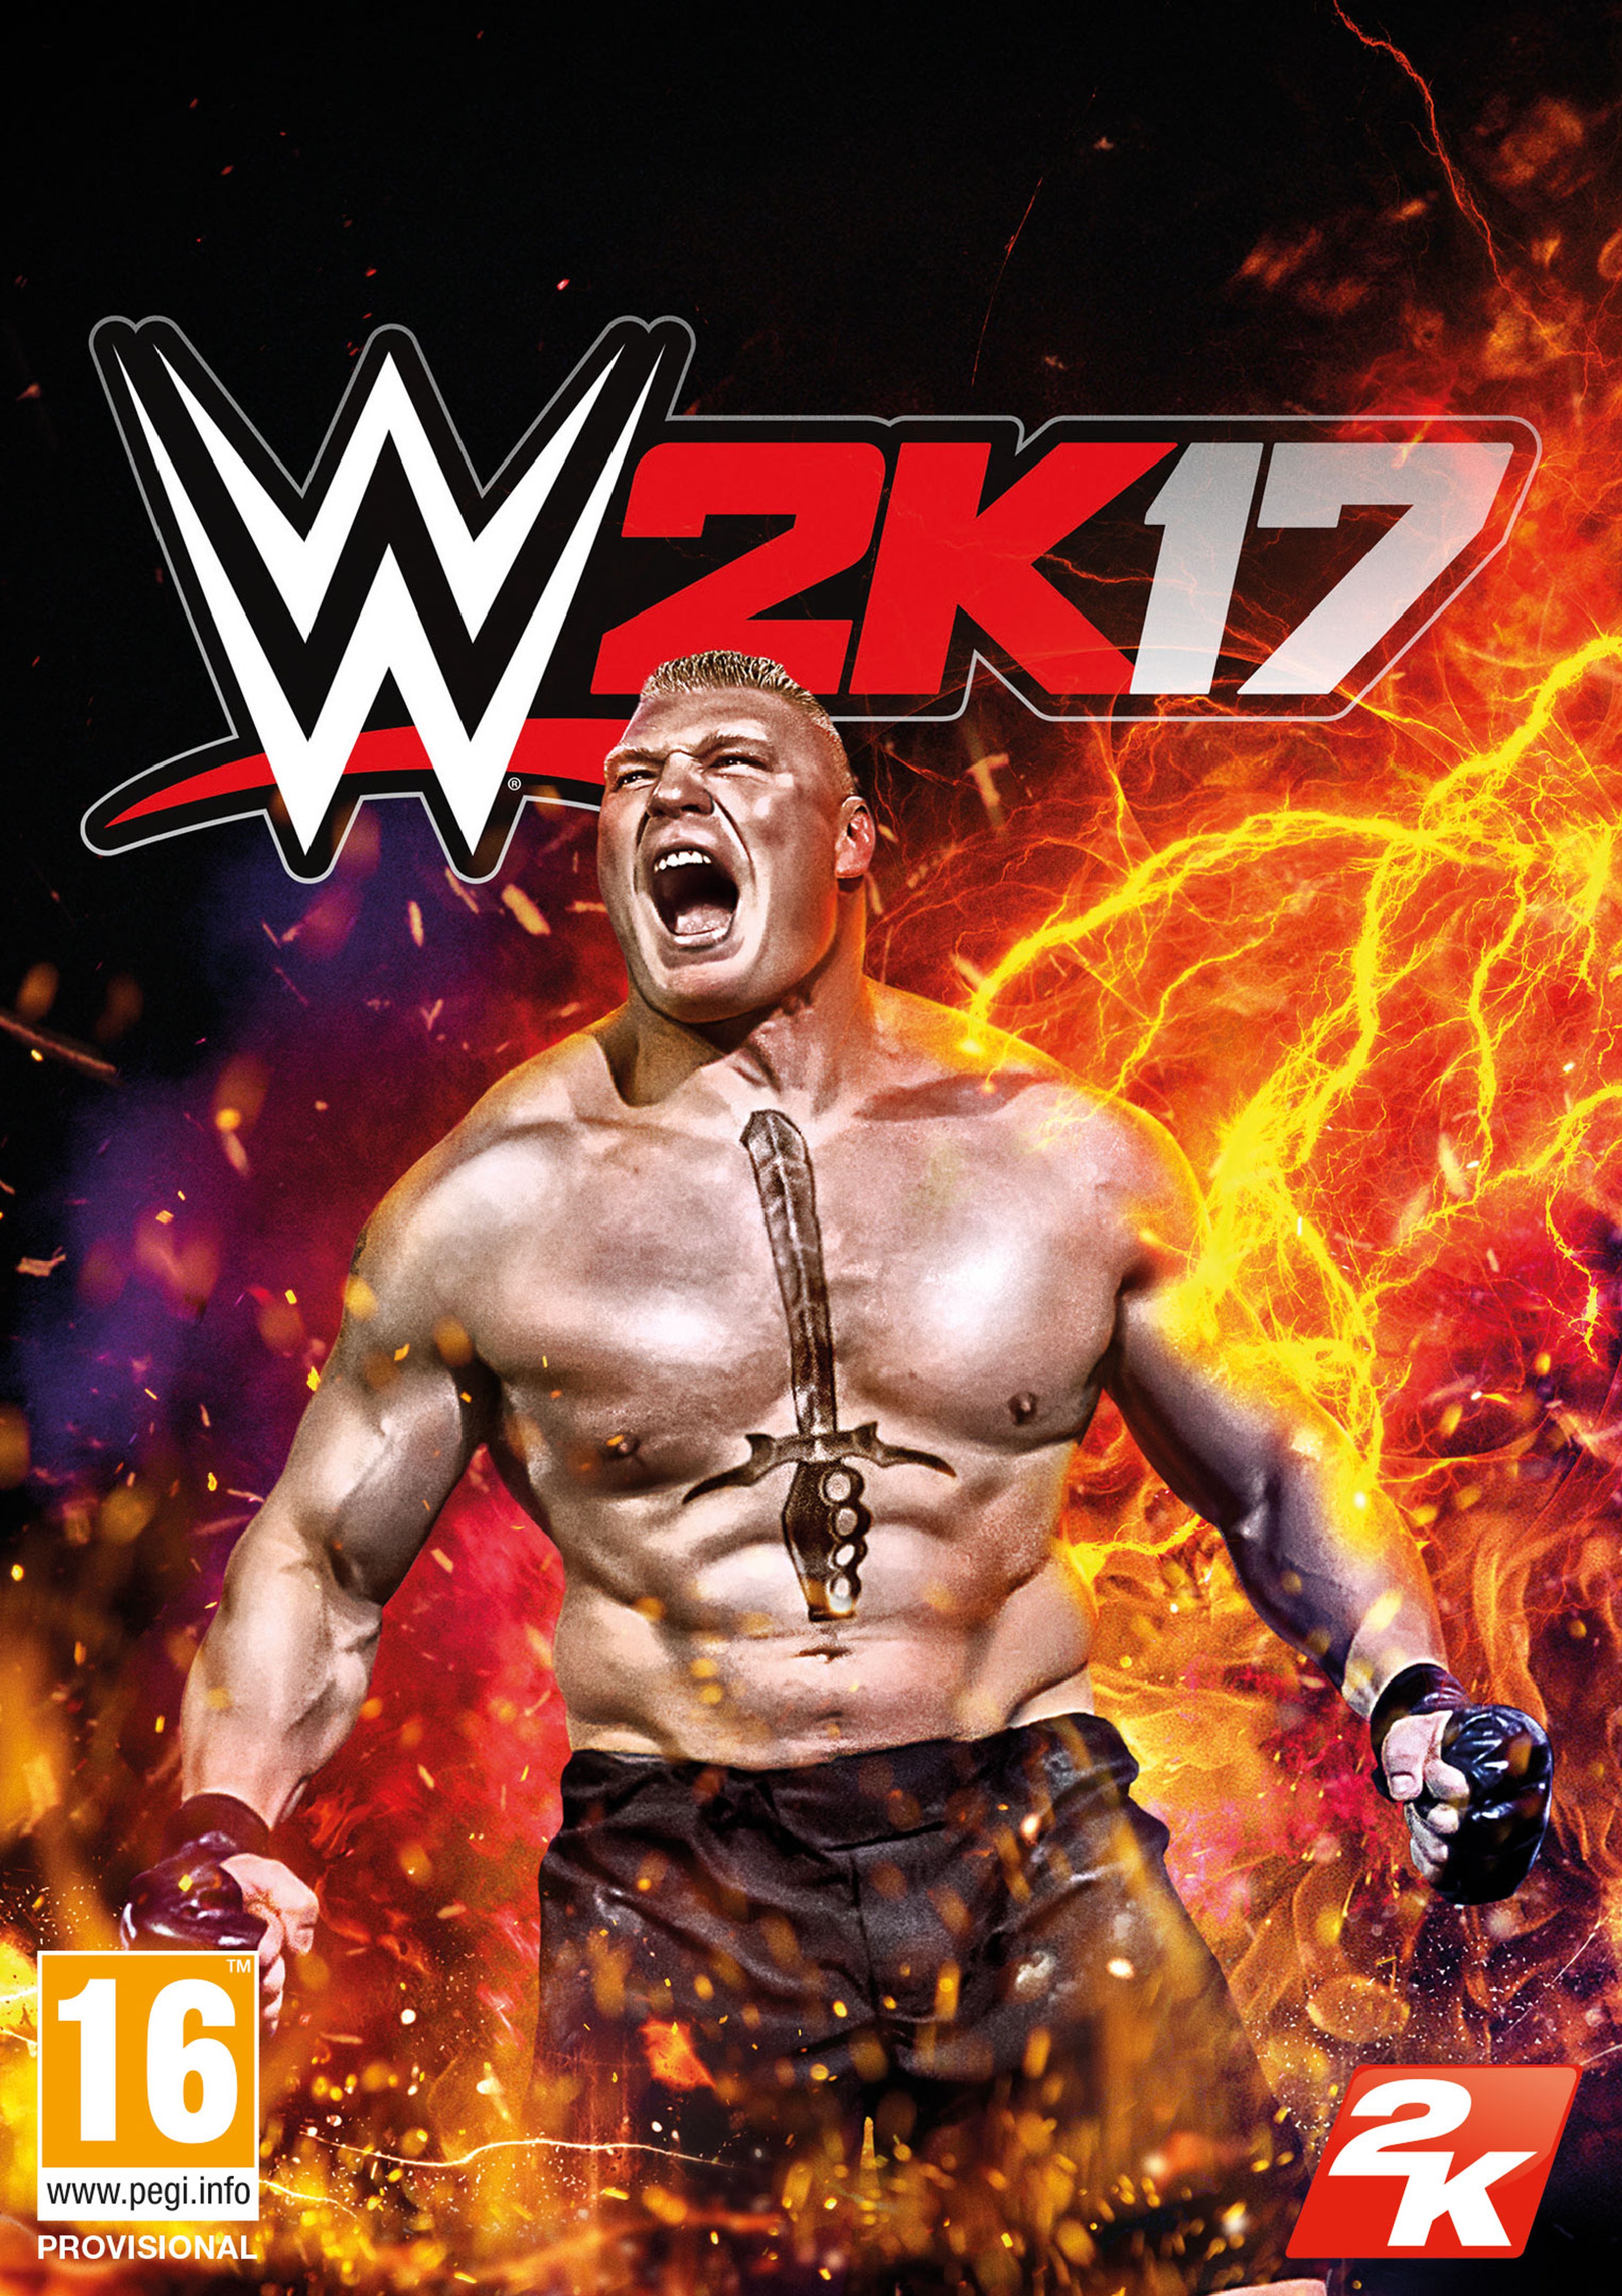 WWE 2K17 - Brock Lesnar protagoniza la portada